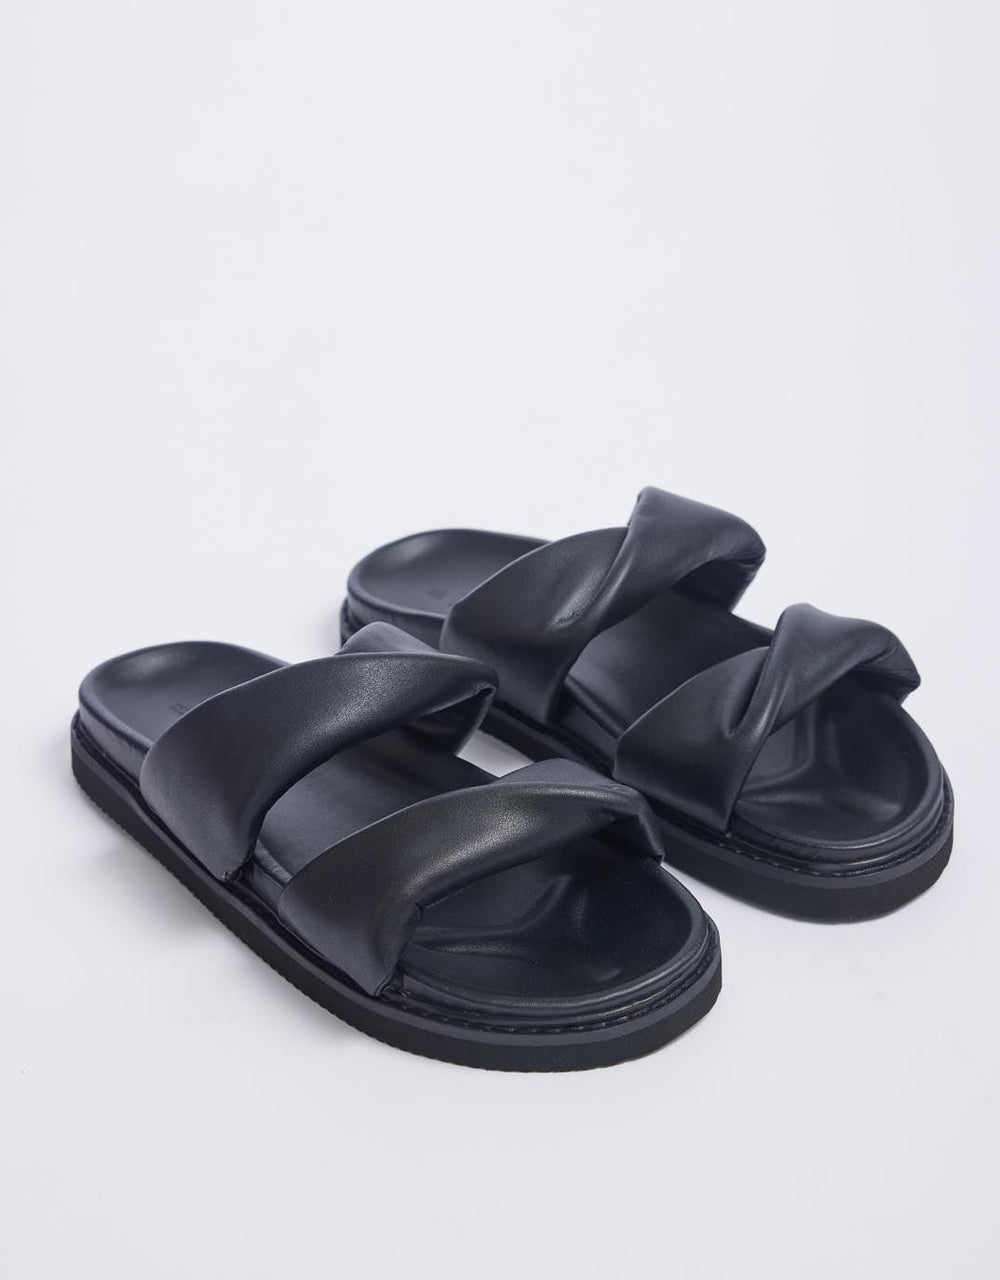 Human Shoes - Tactful Slides - Black - White & Co Living Shoes